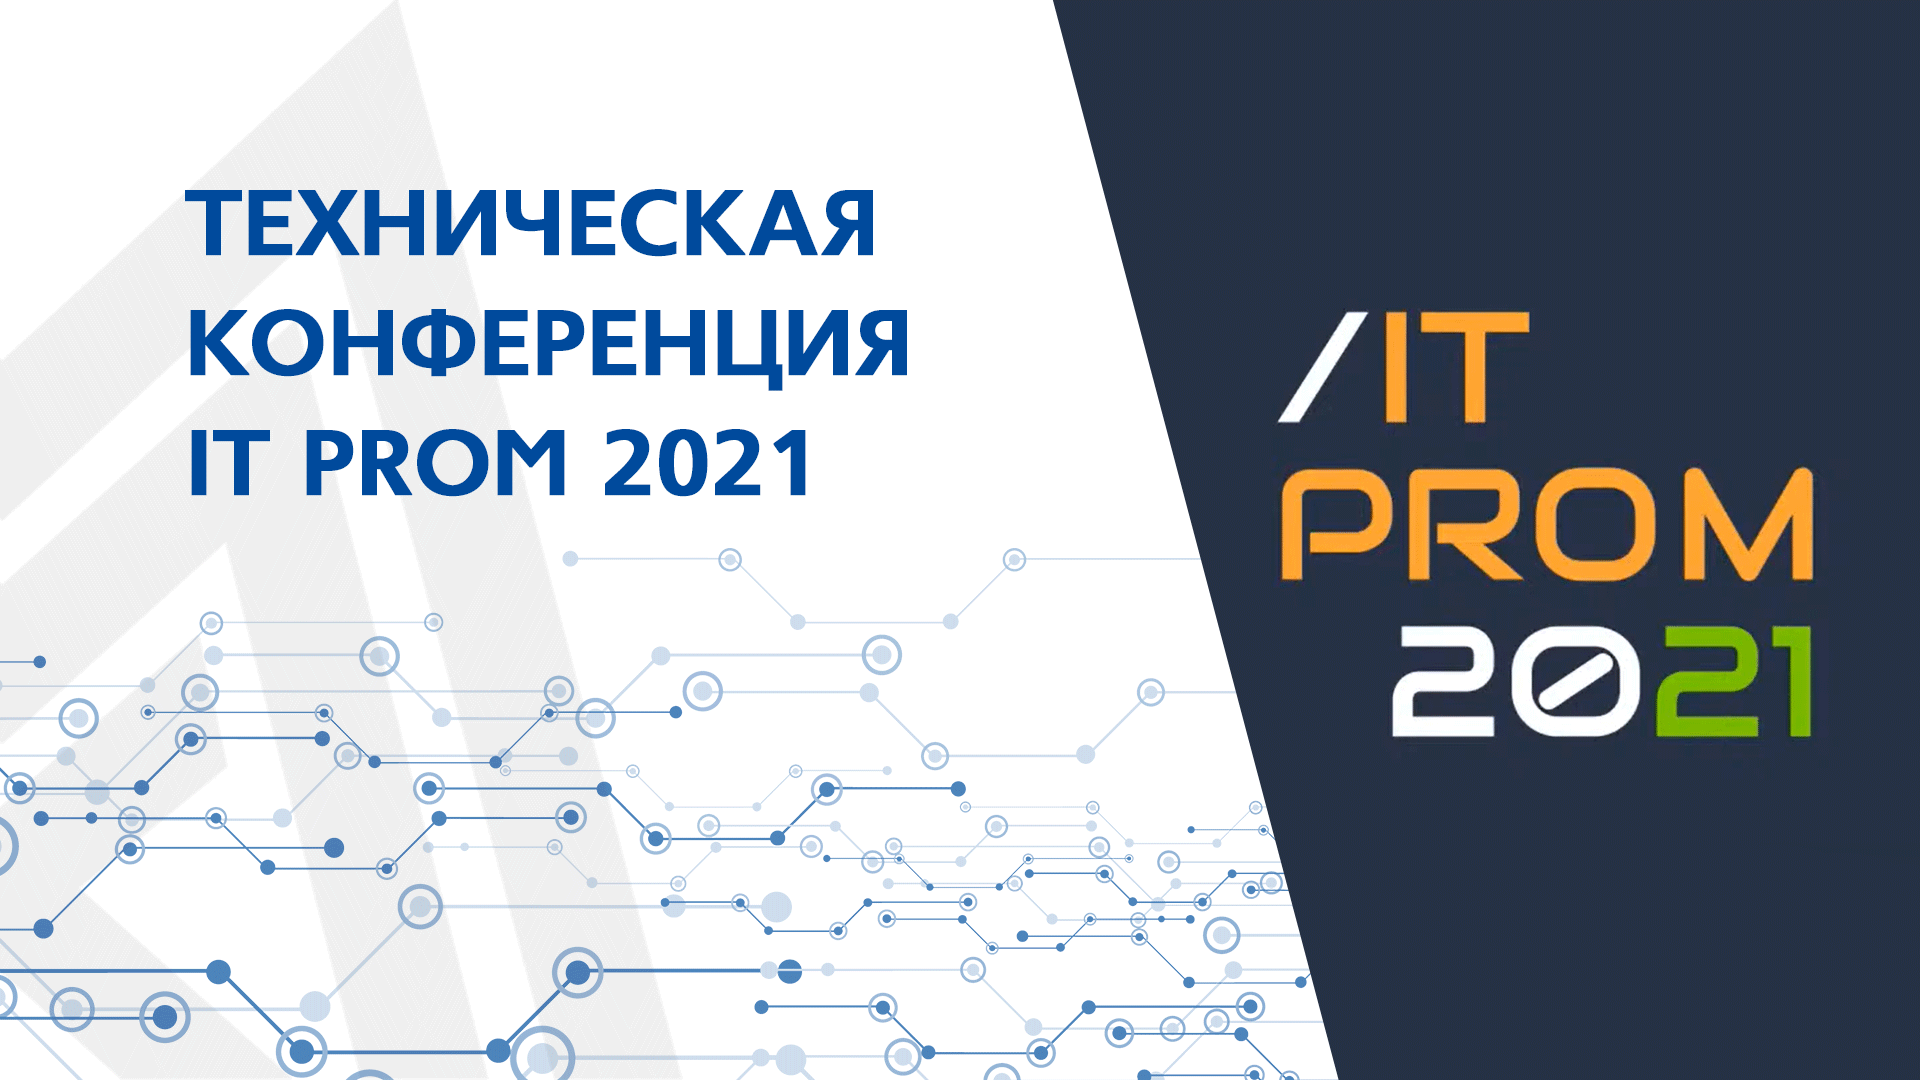 Техническая конференция IT PROm 2021